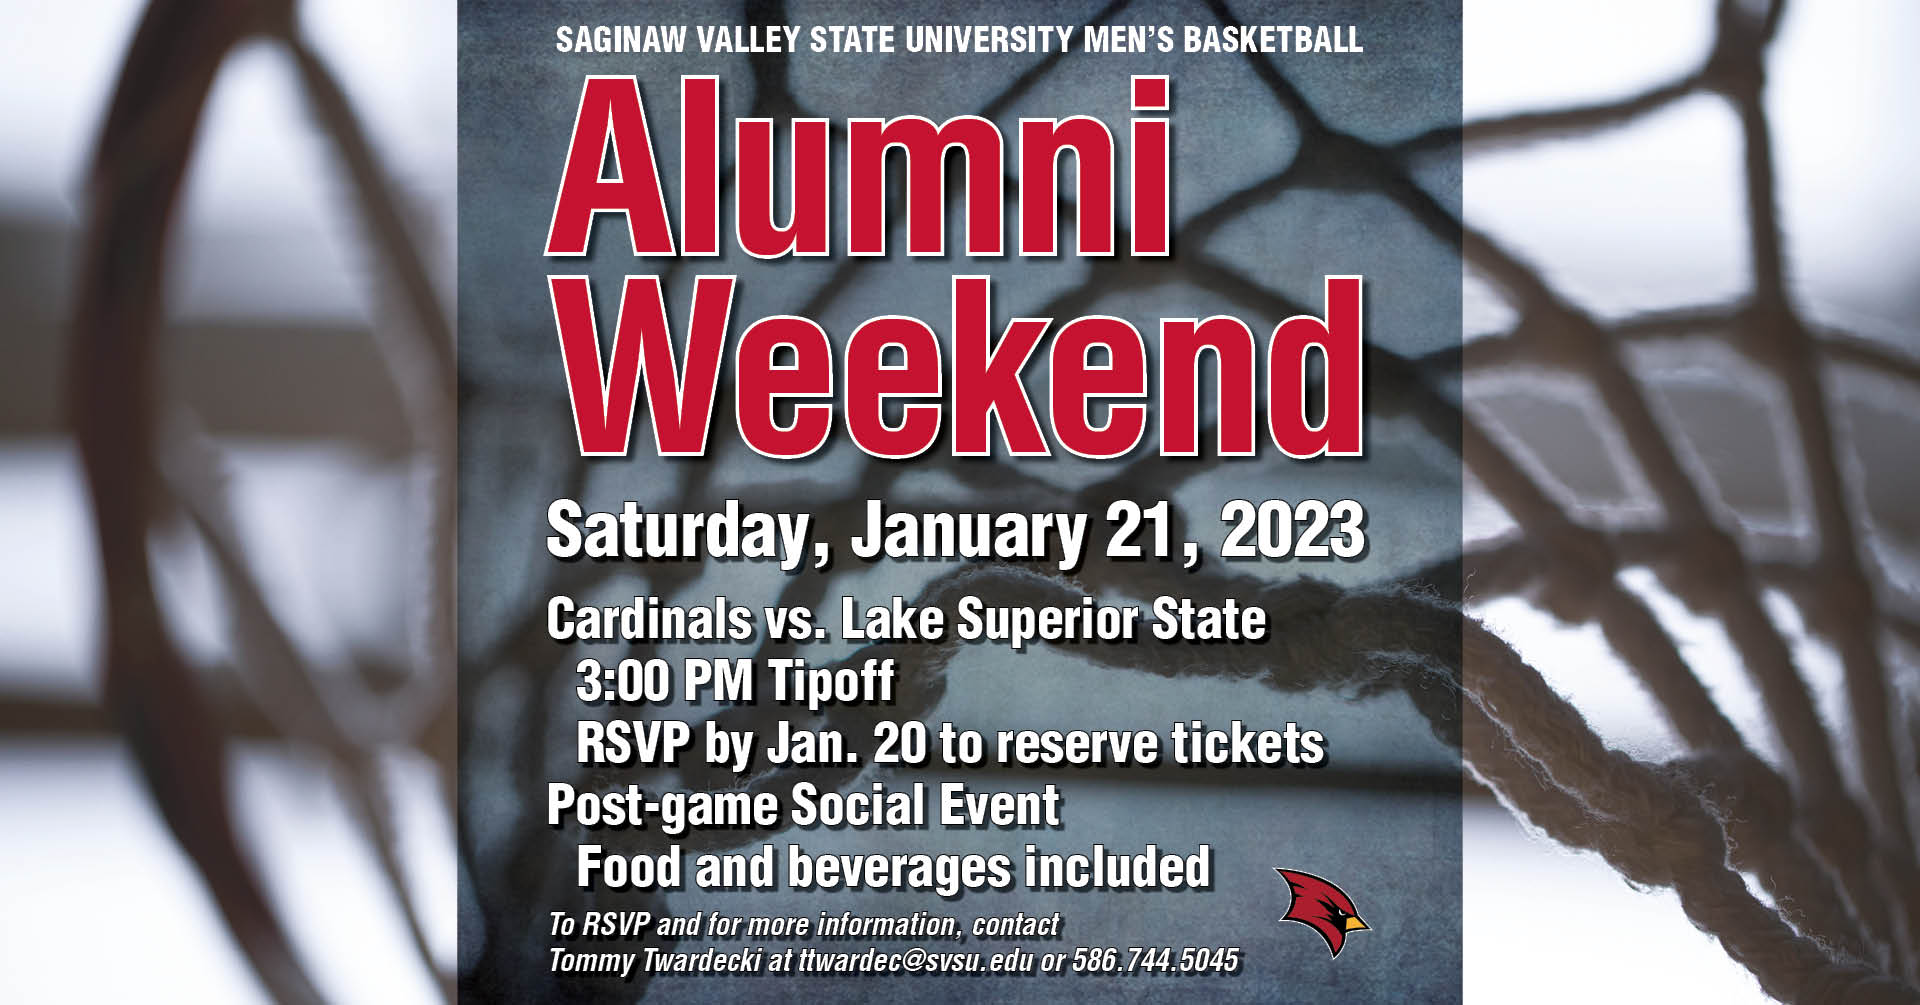 Men’s Basketball Alumni Weekend takes place Saturday, January 21